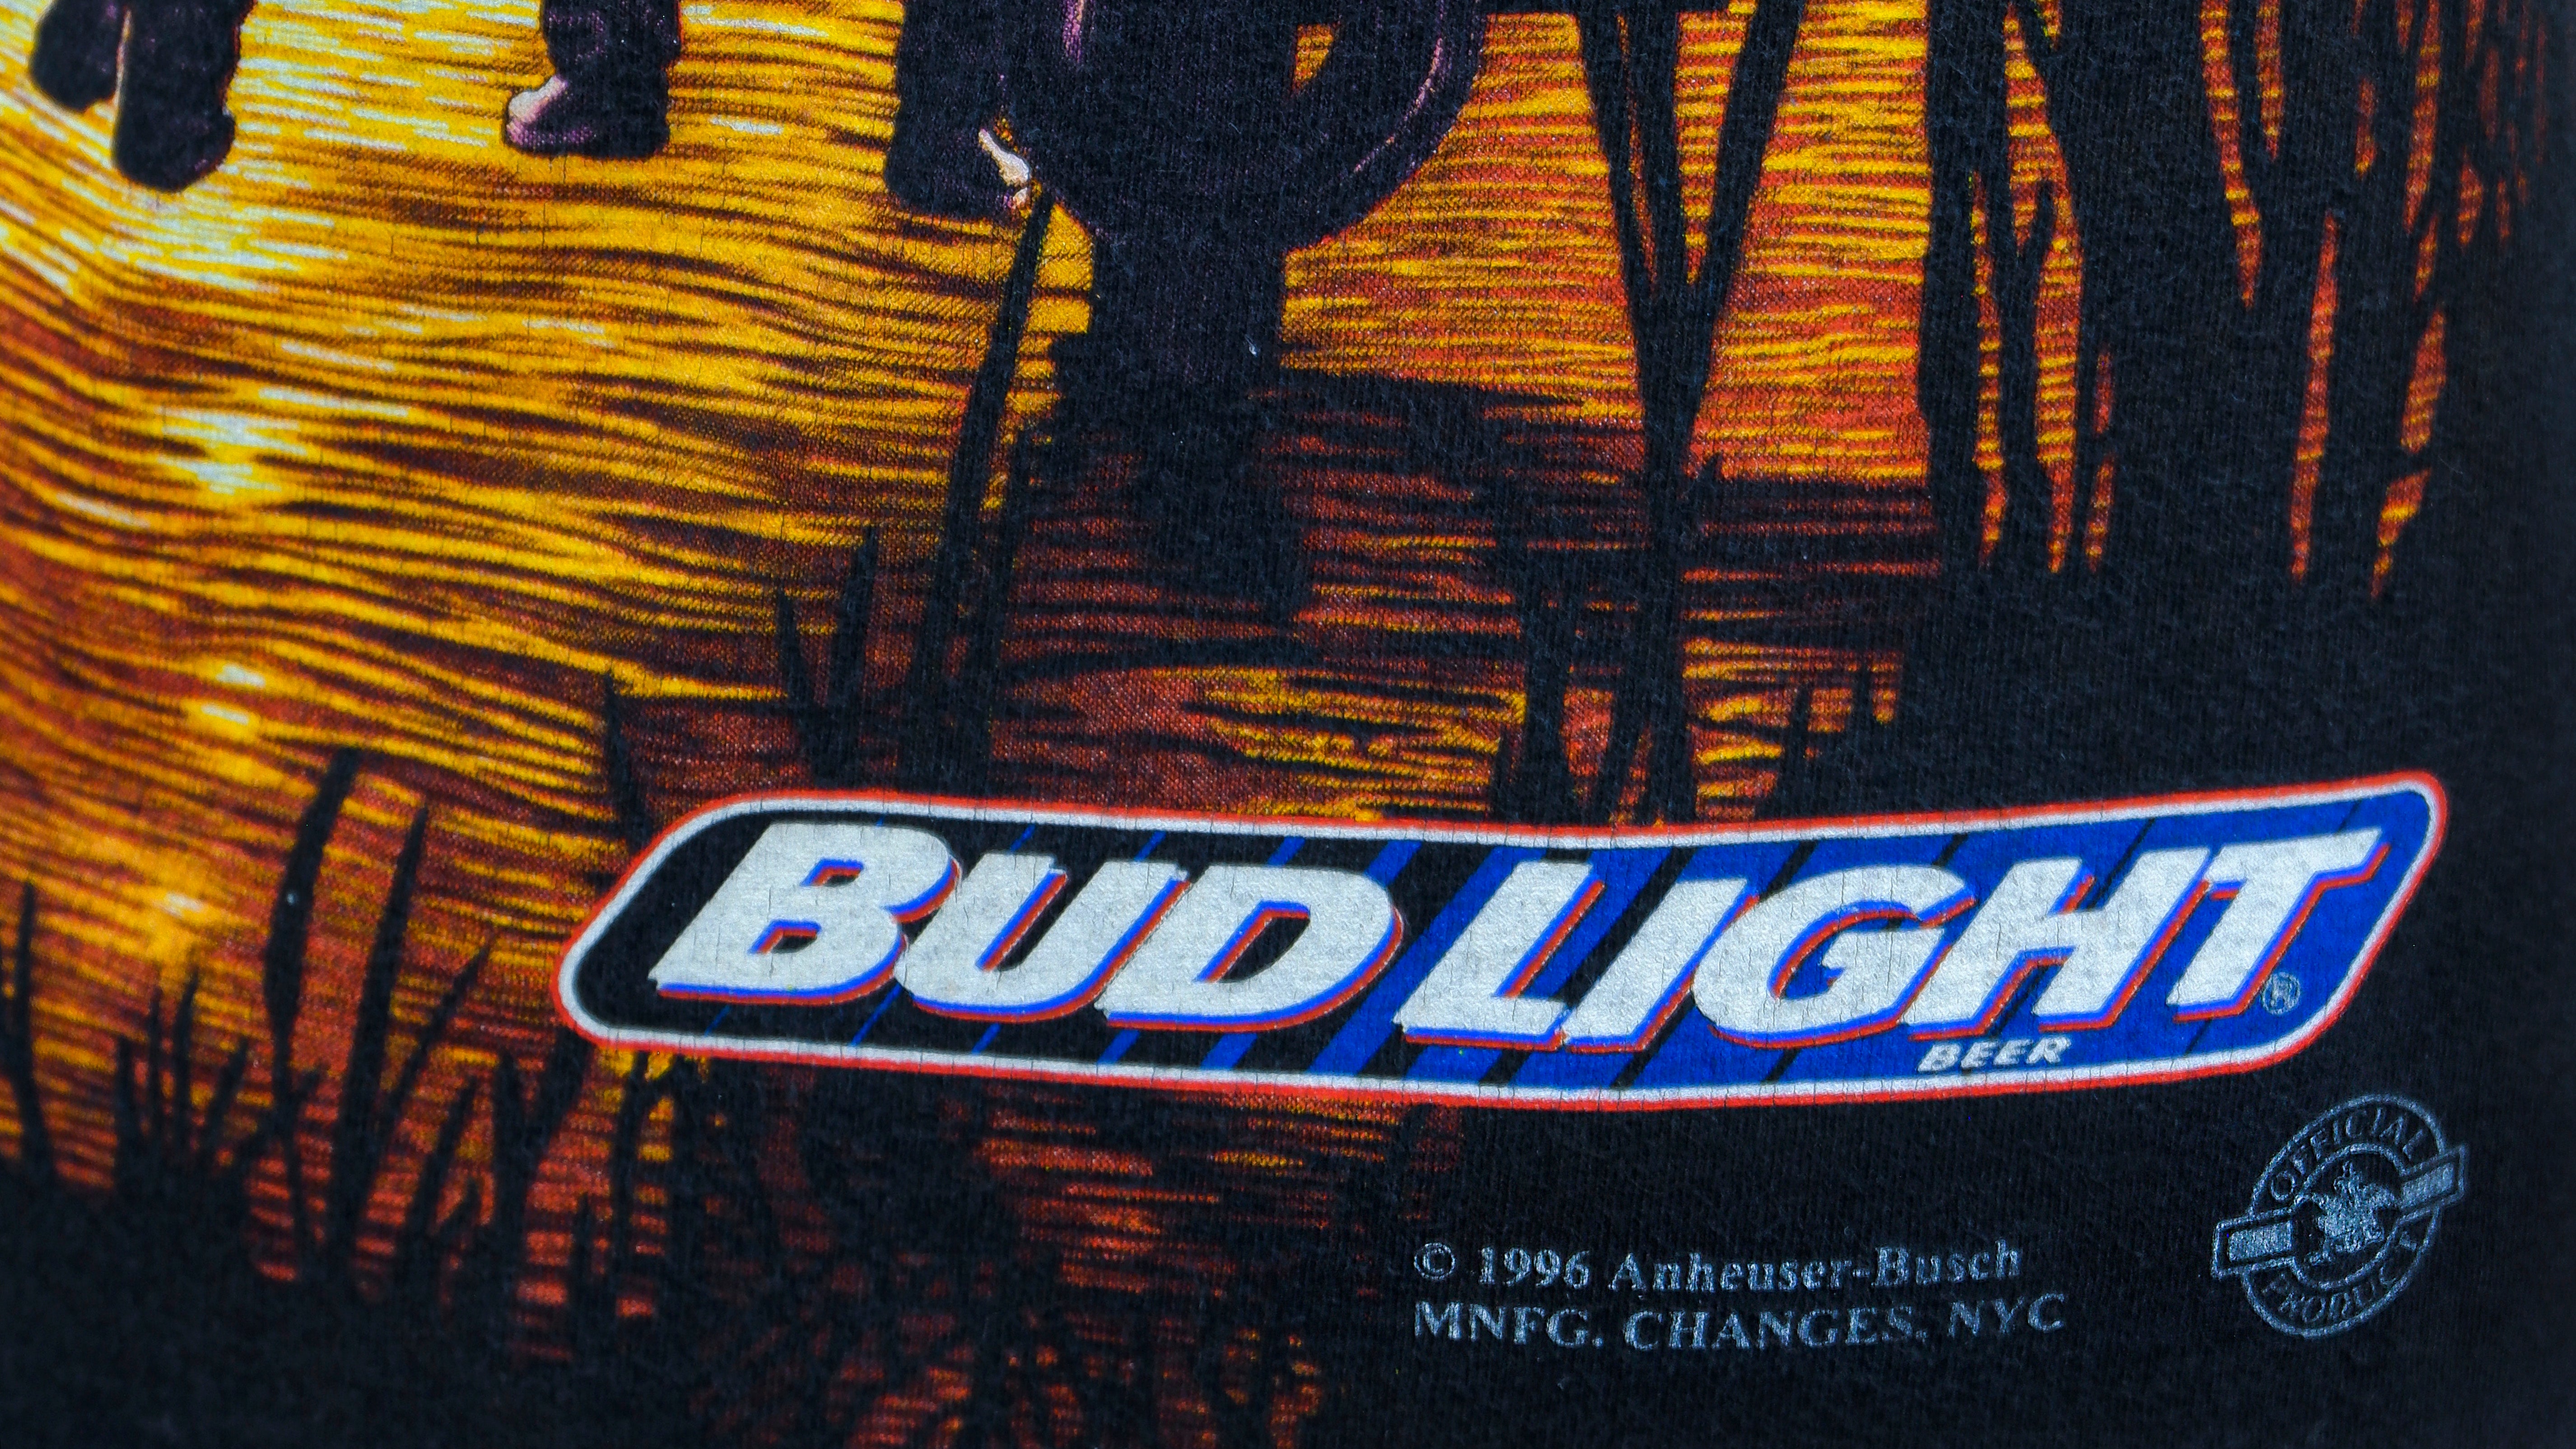 Bud Light Philadelphia Eagles T-Shirt M